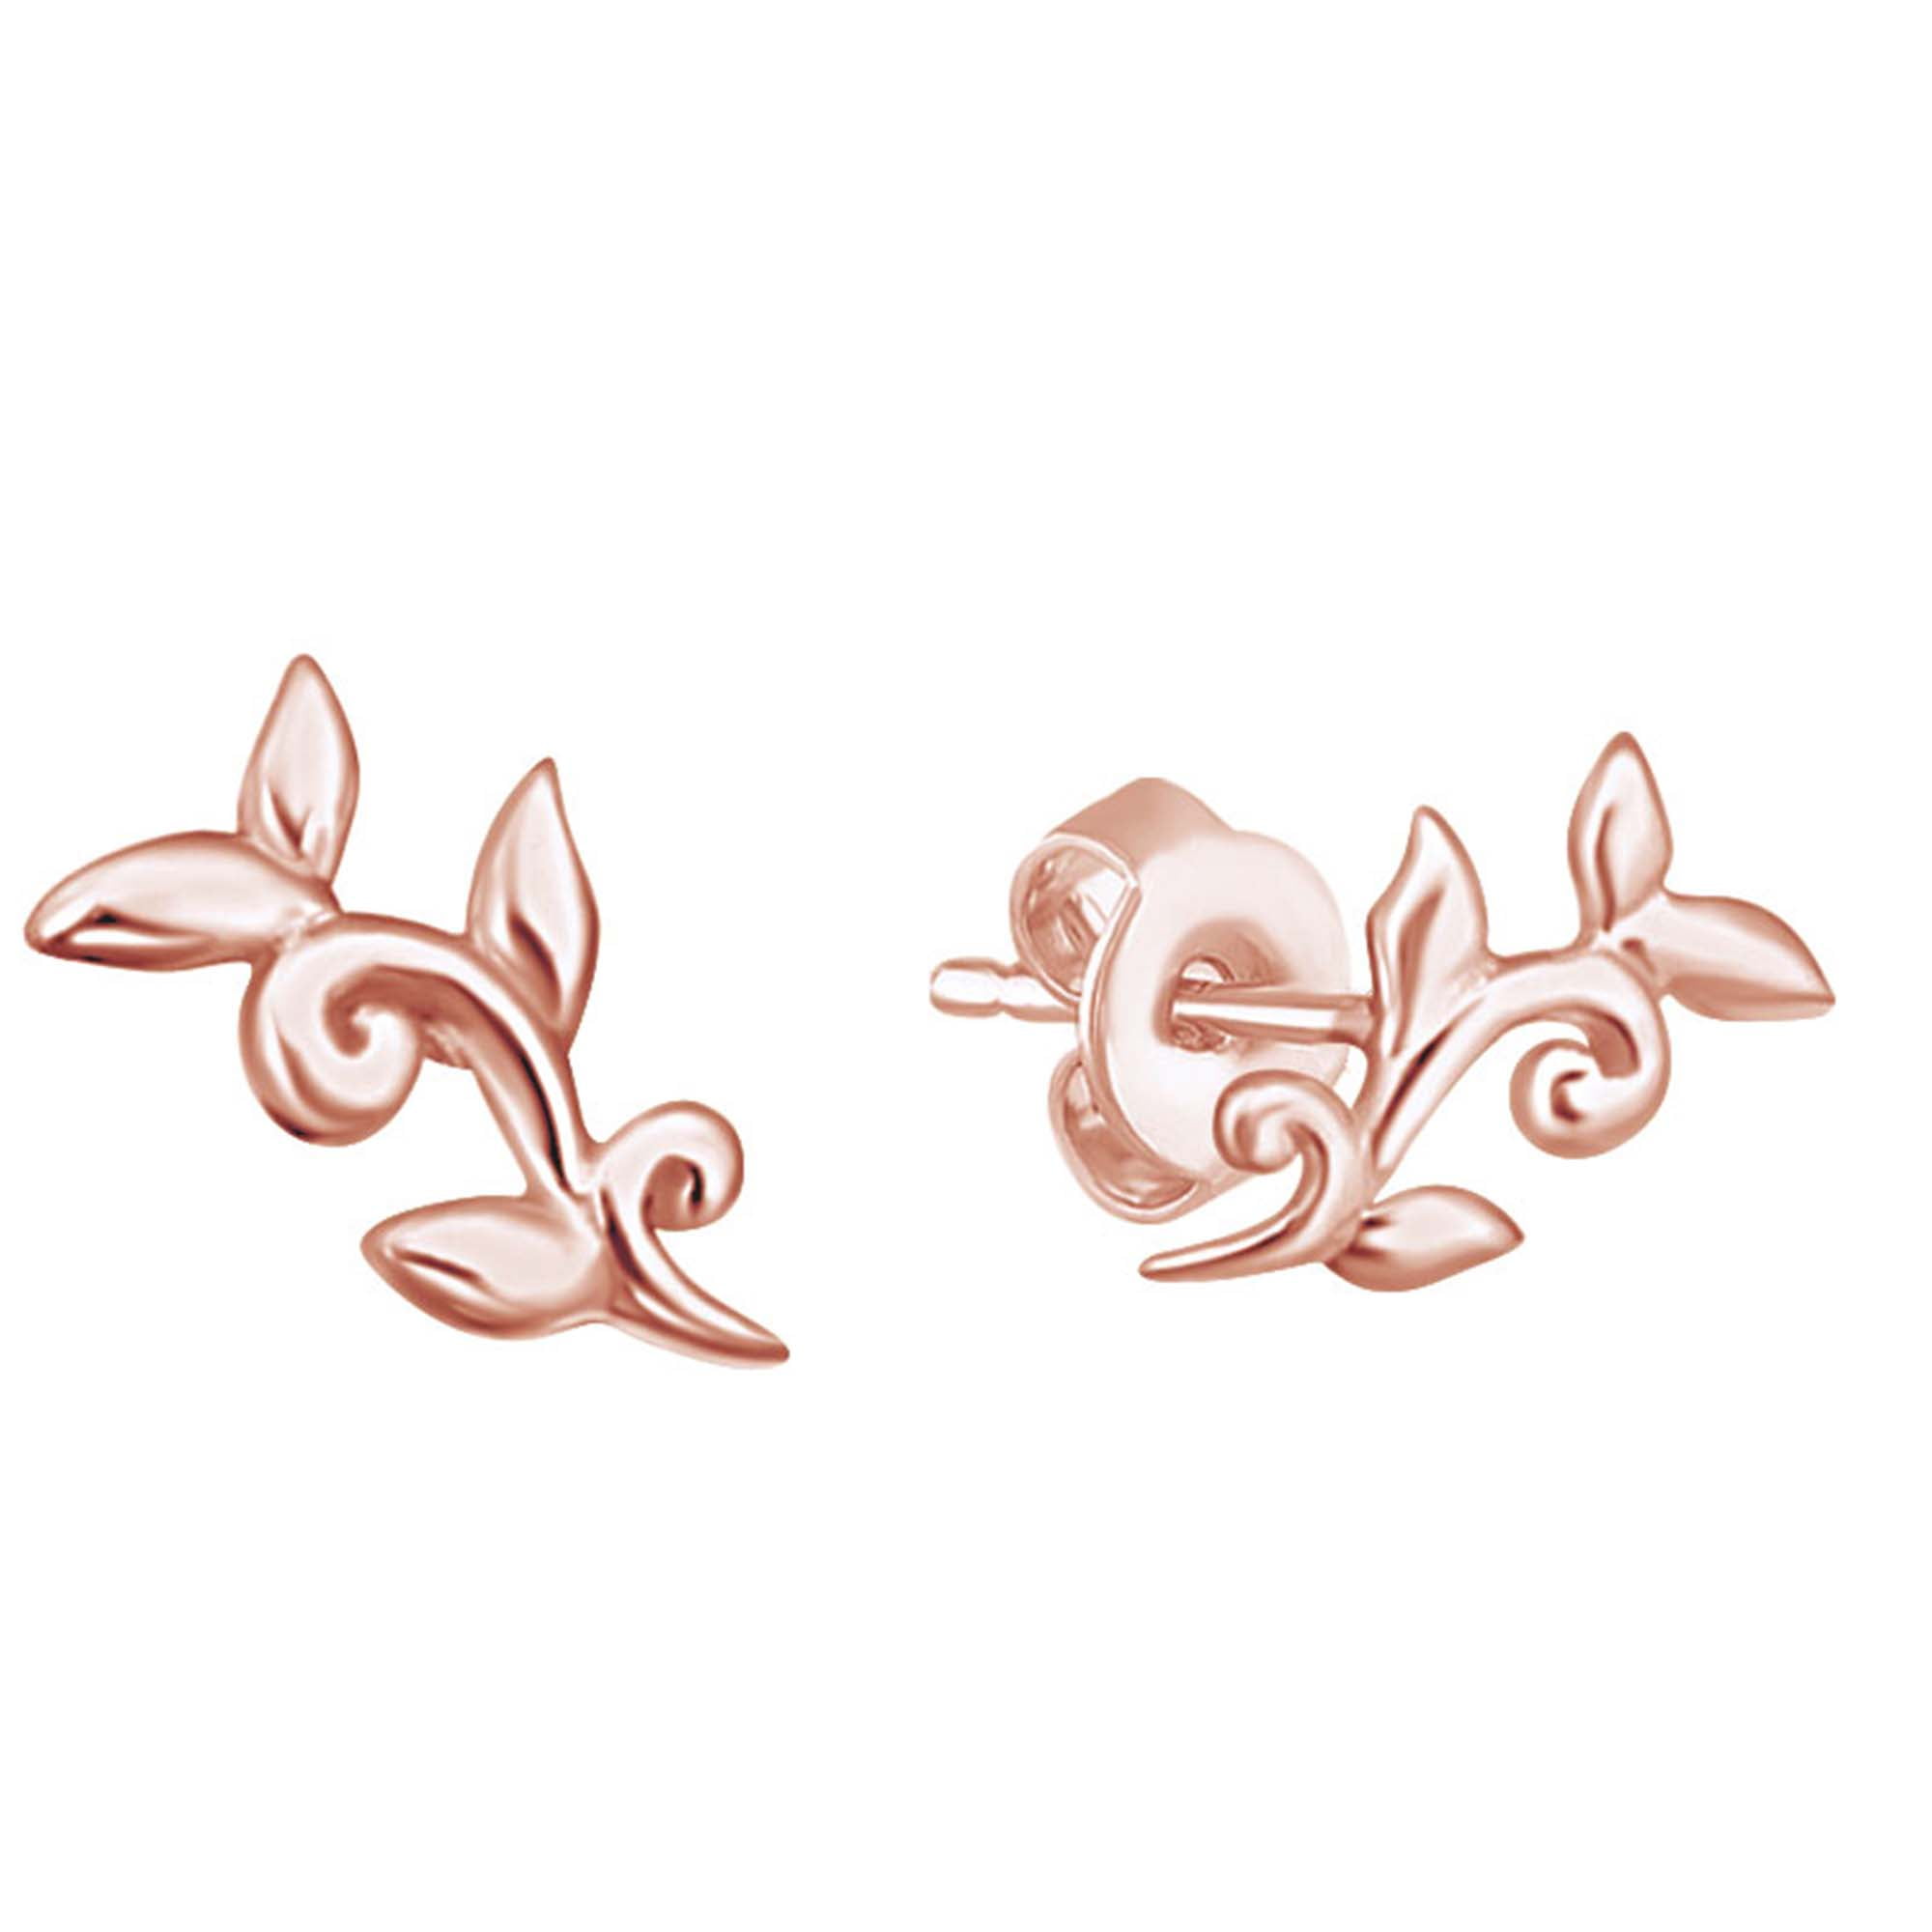 Vine Leaf Stud Earring In 14K Rose Gold Over Sterling Silver For Women